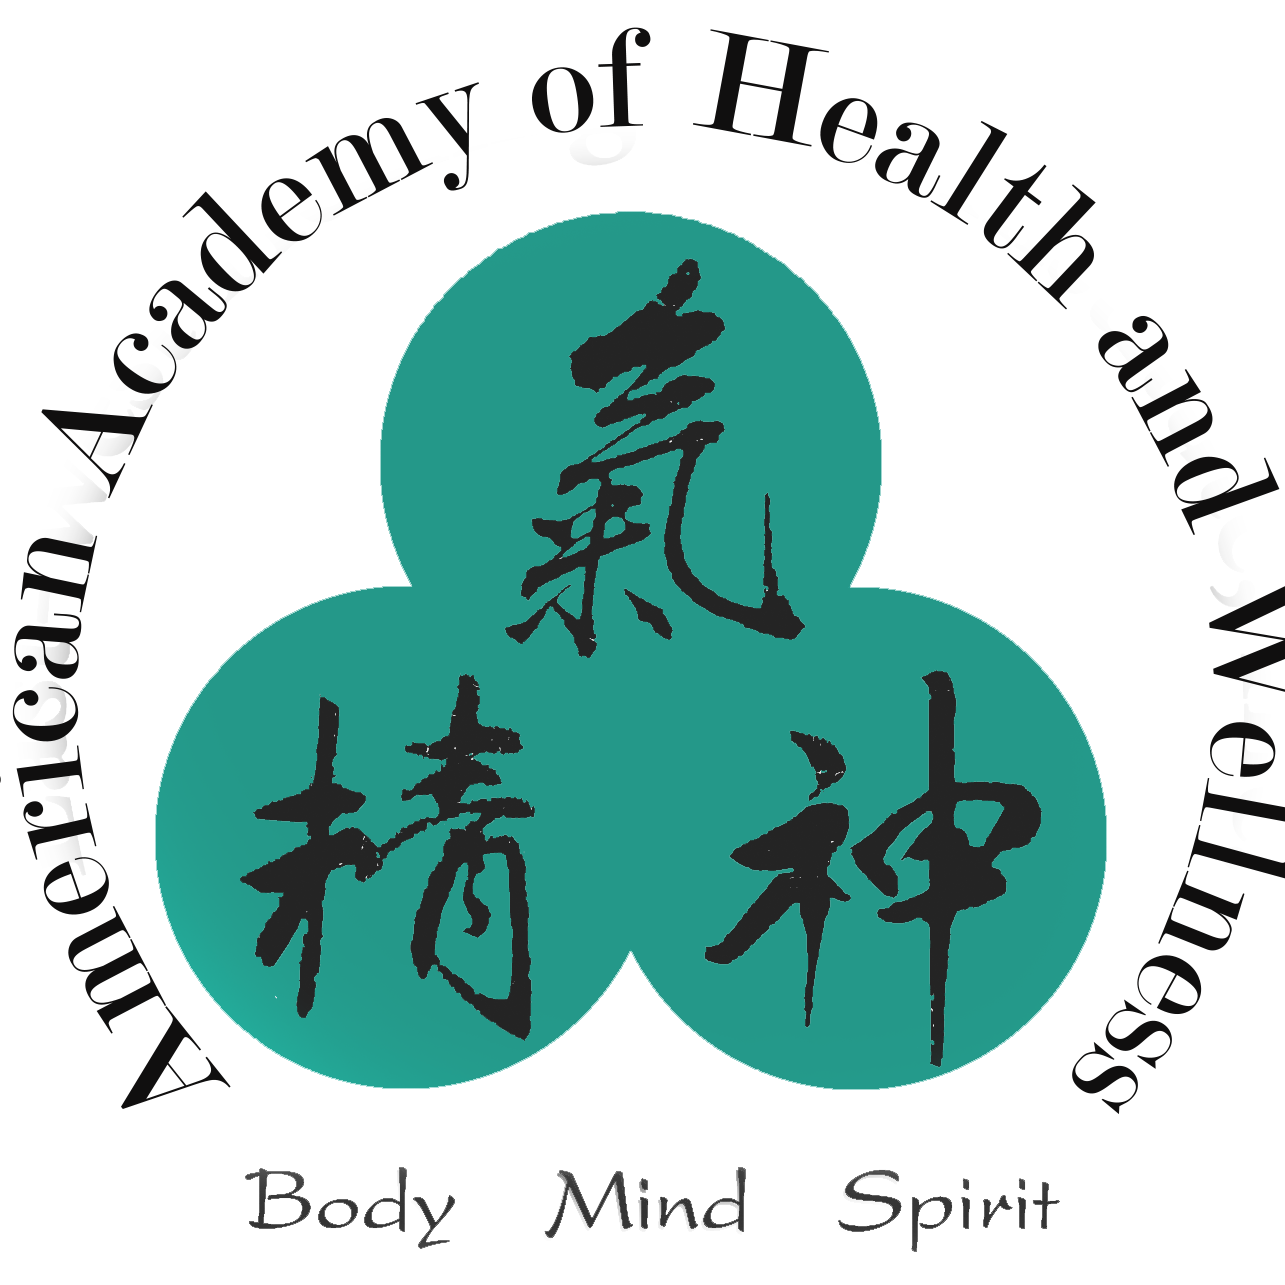 American Academy of Health and Wellness